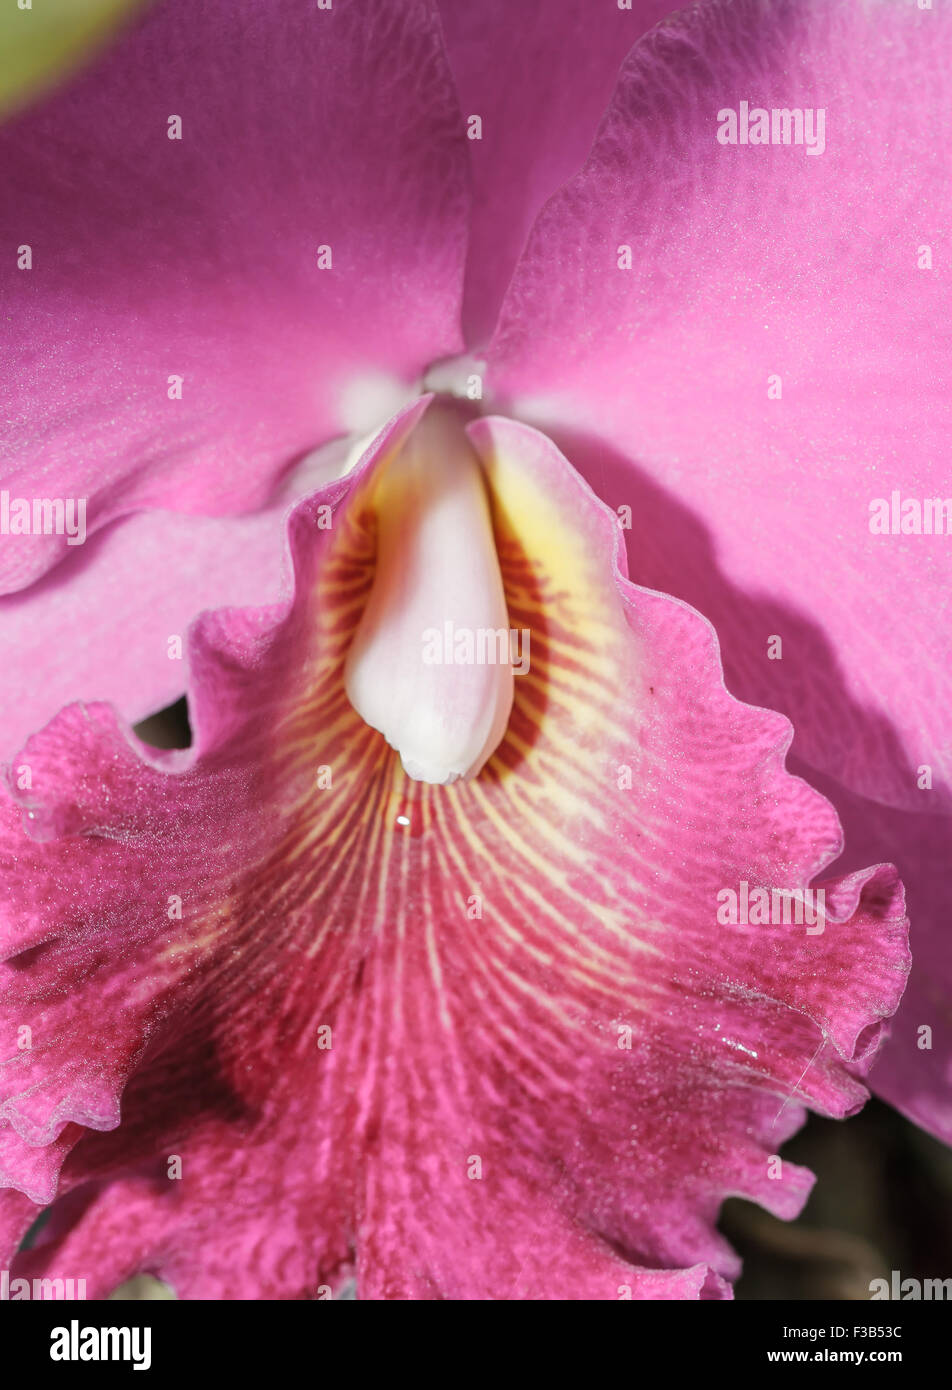 Cattleya labiata orchids Stock Photo